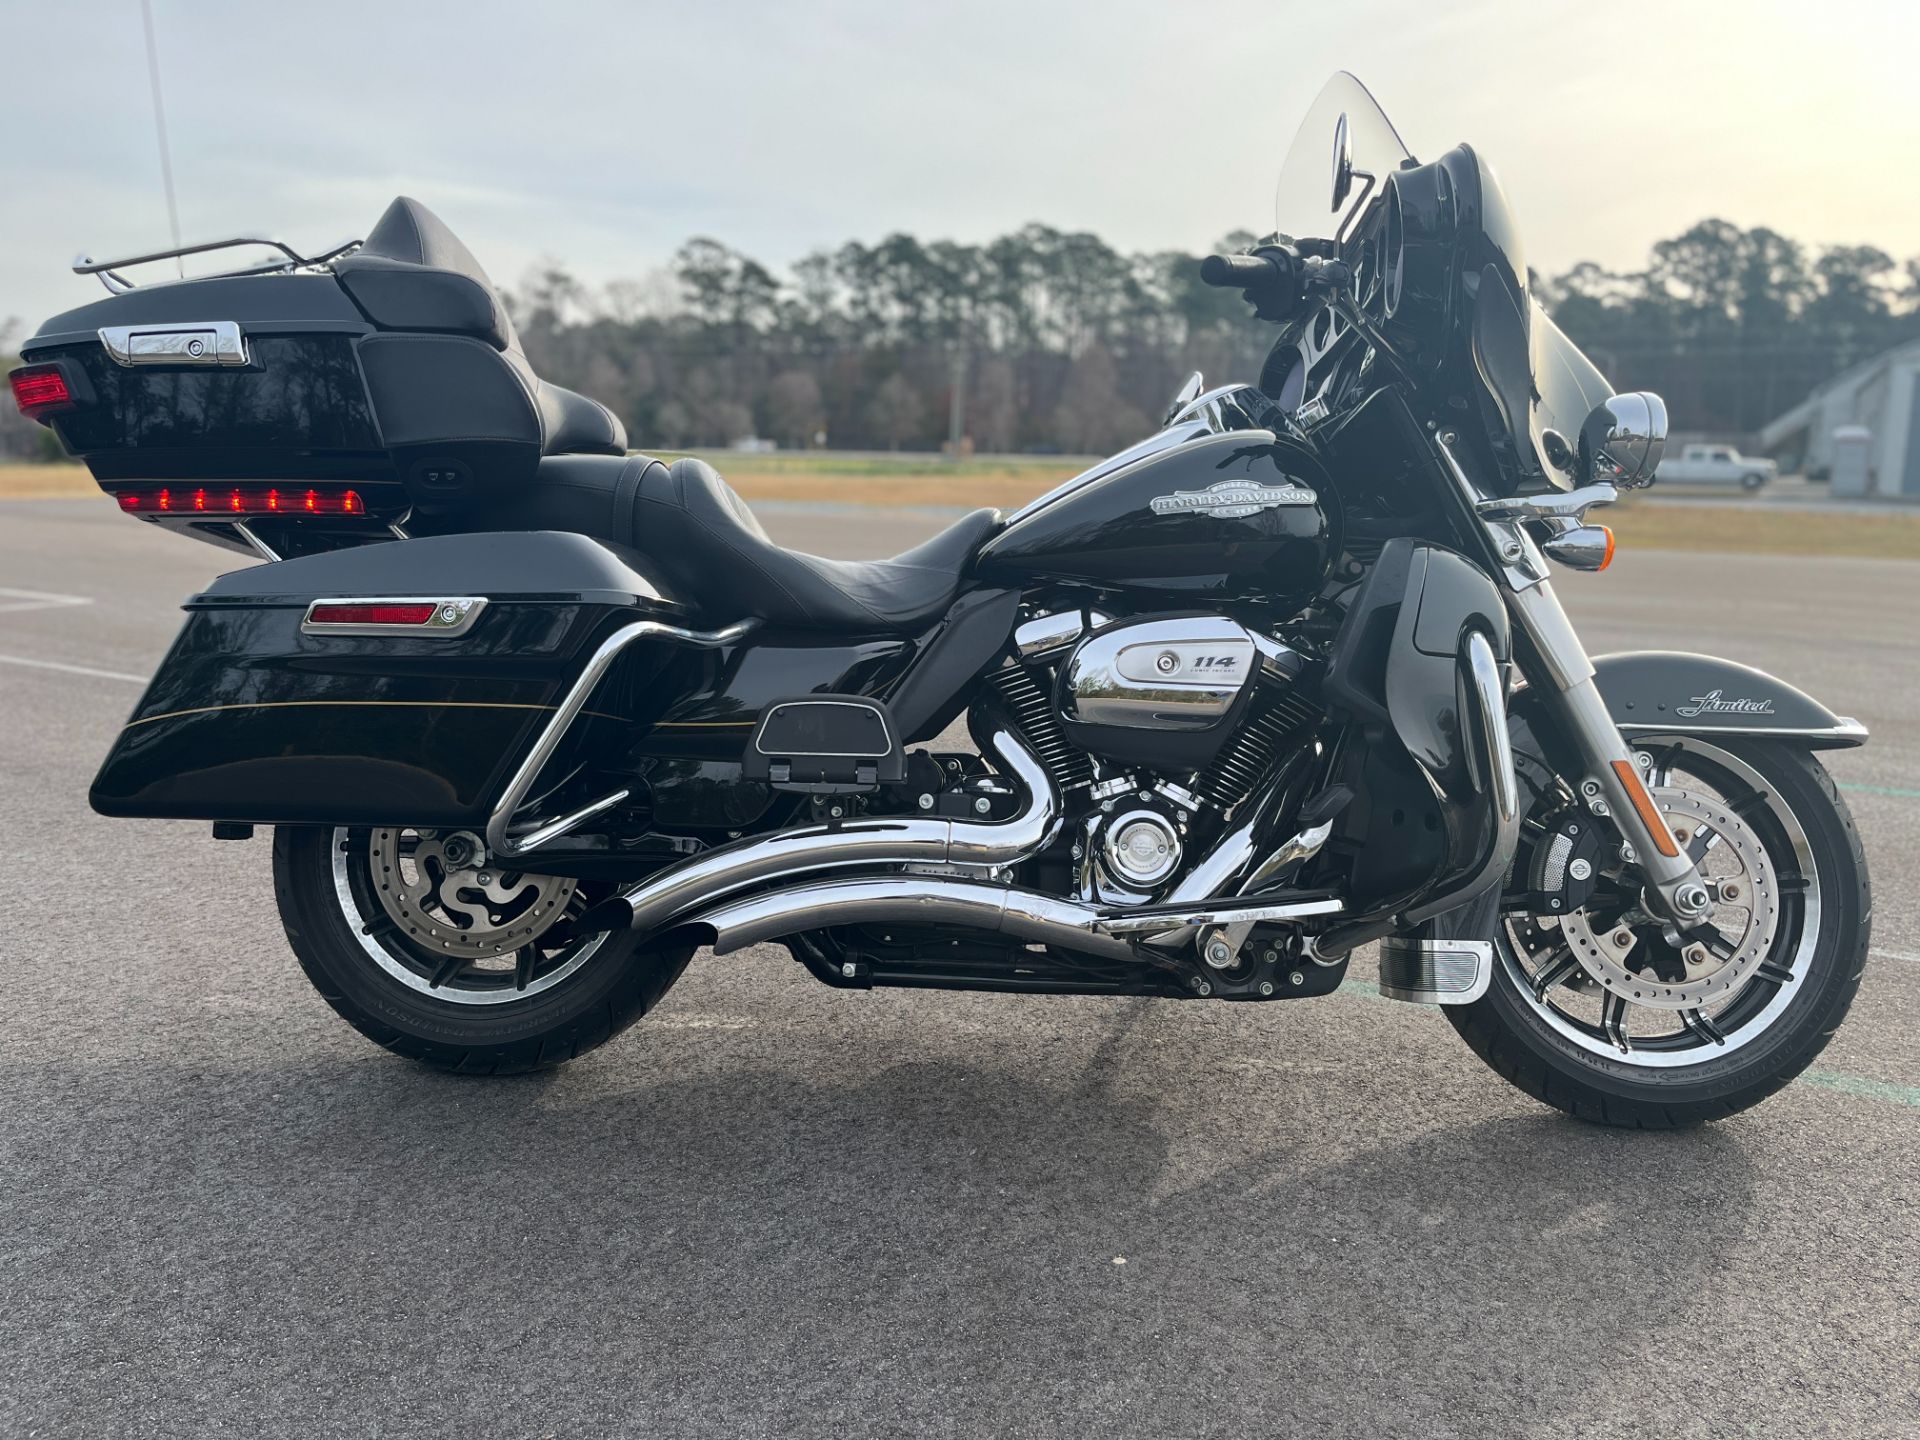 2019 Harley-Davidson ELECTRA GLIDE® ULTRA LIMITED in Jacksonville, North Carolina - Photo 1